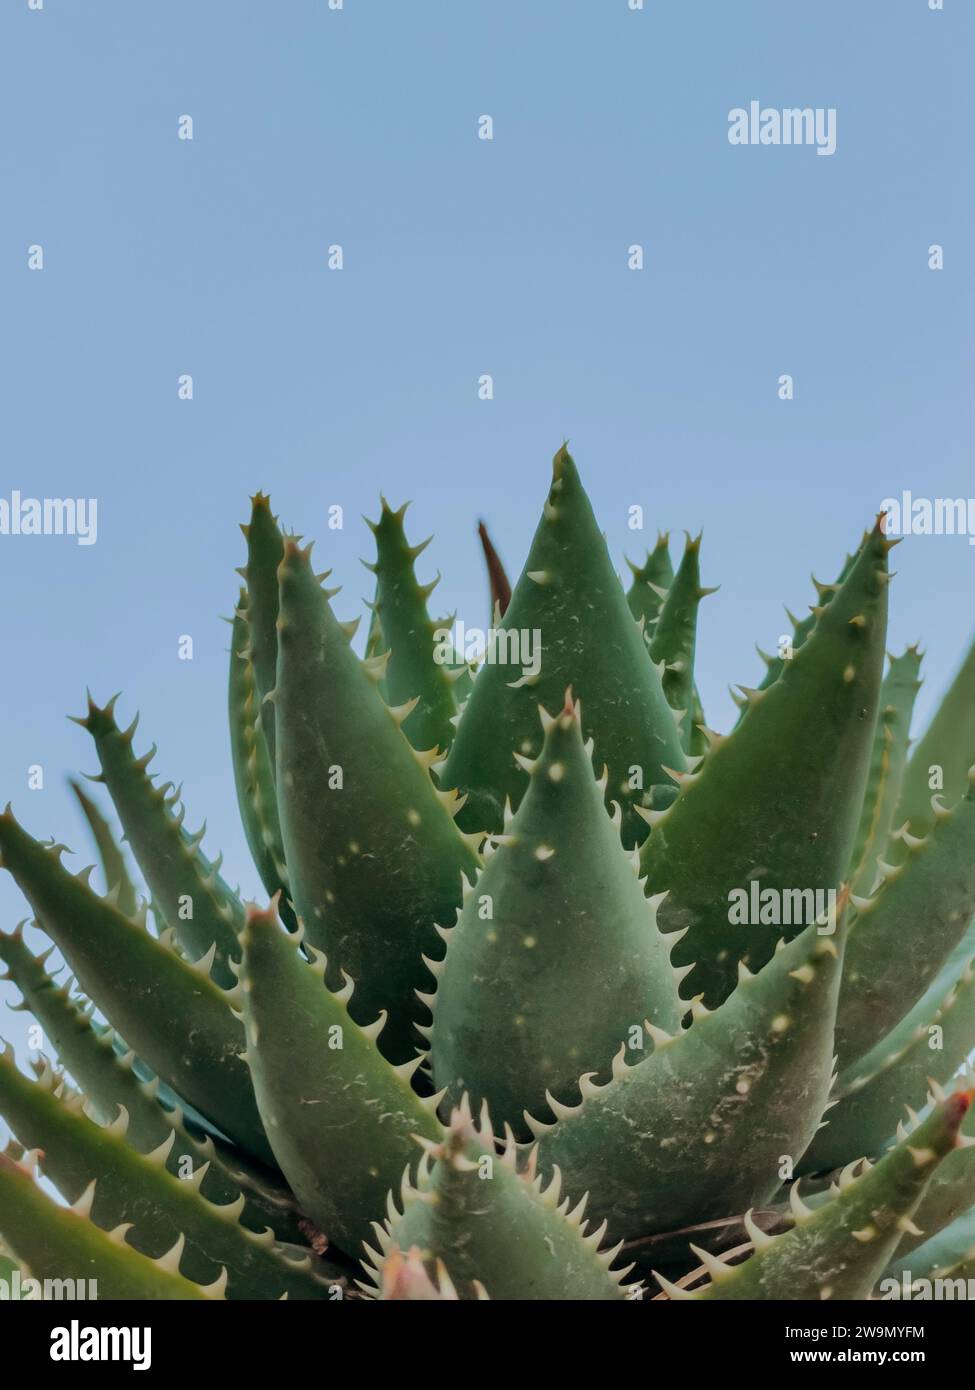 Close-up of a succulent plant against a blue sky, Majorca, Spain Stock Photo